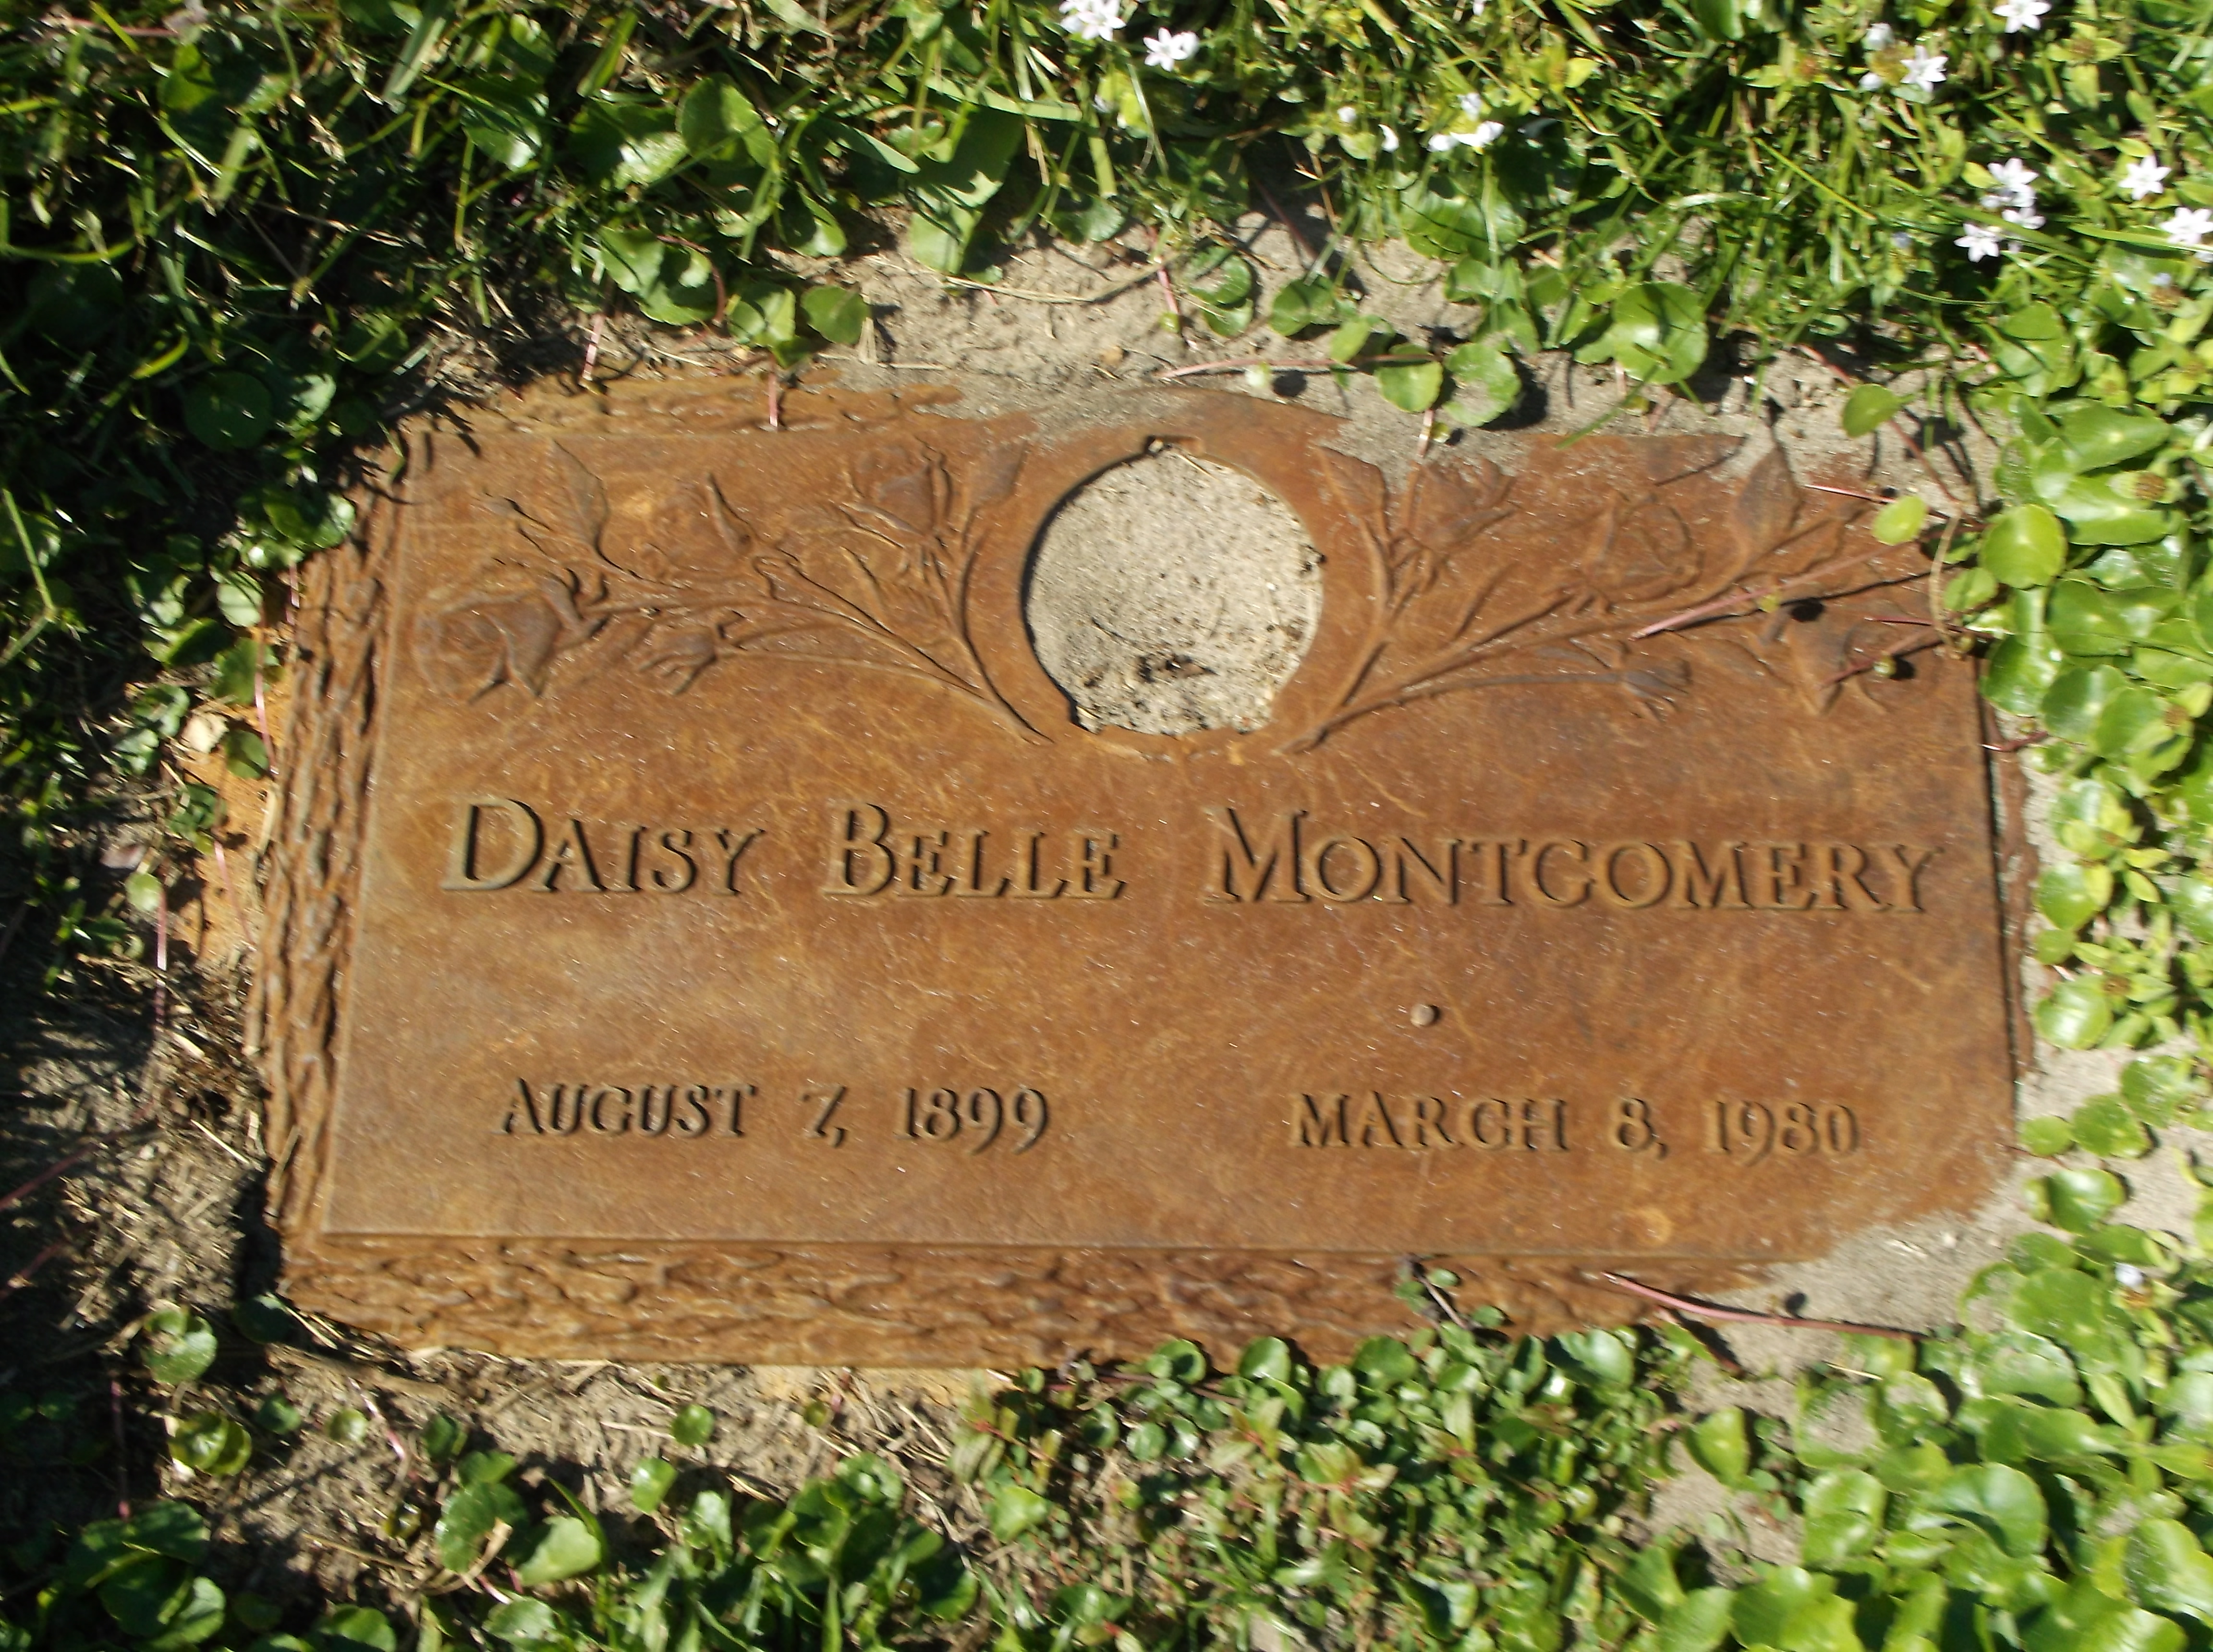 Daisy Belle Montgomery